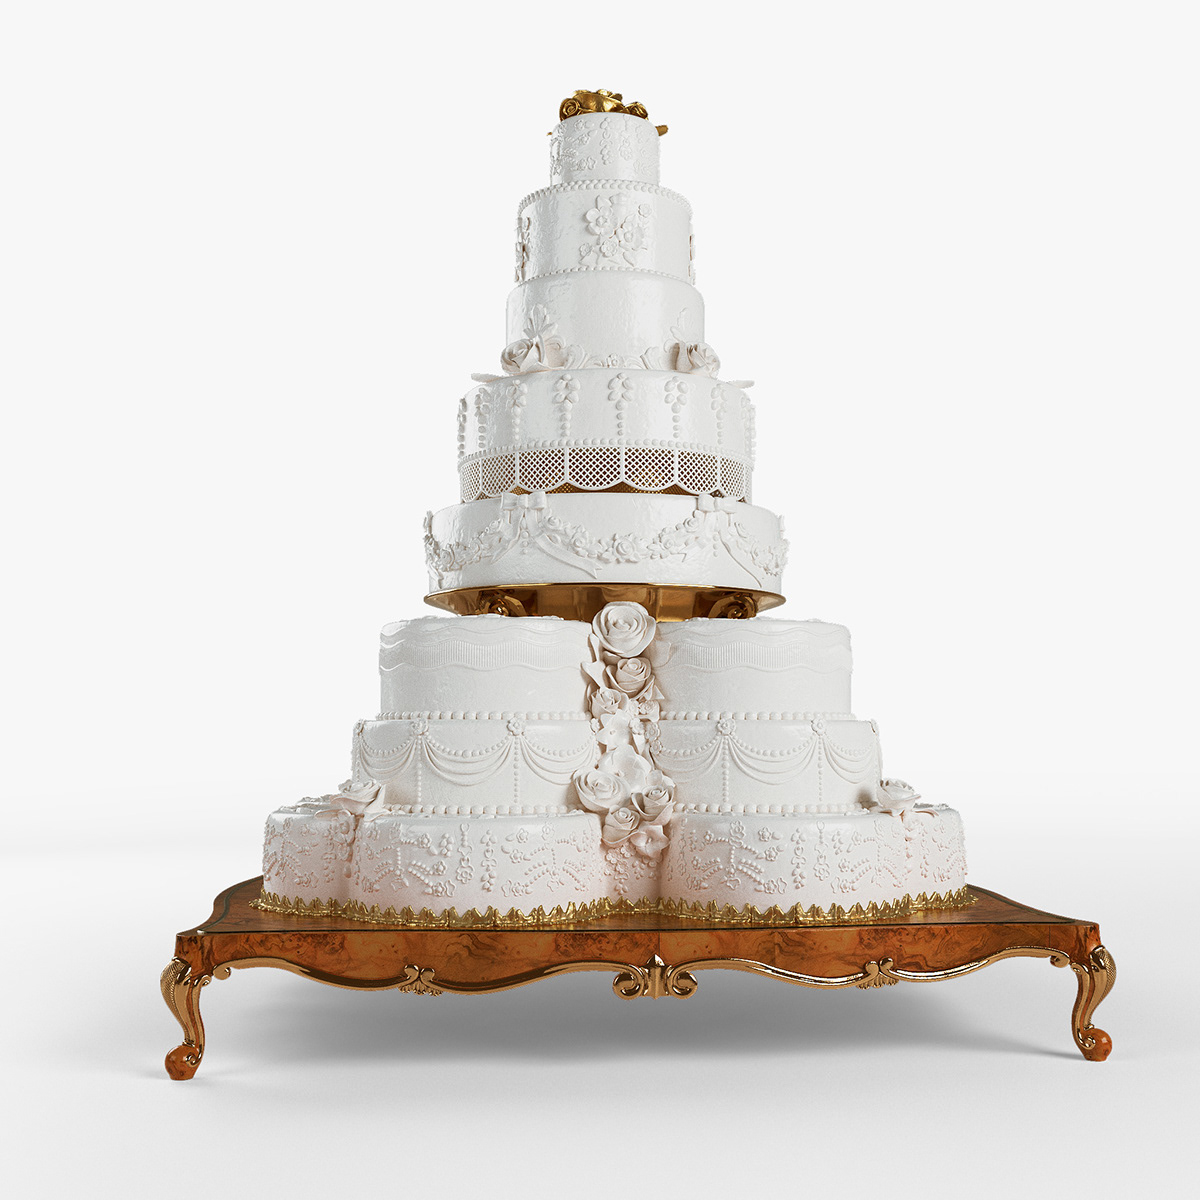 Image may contain: birthday cake, wedding cake and cake